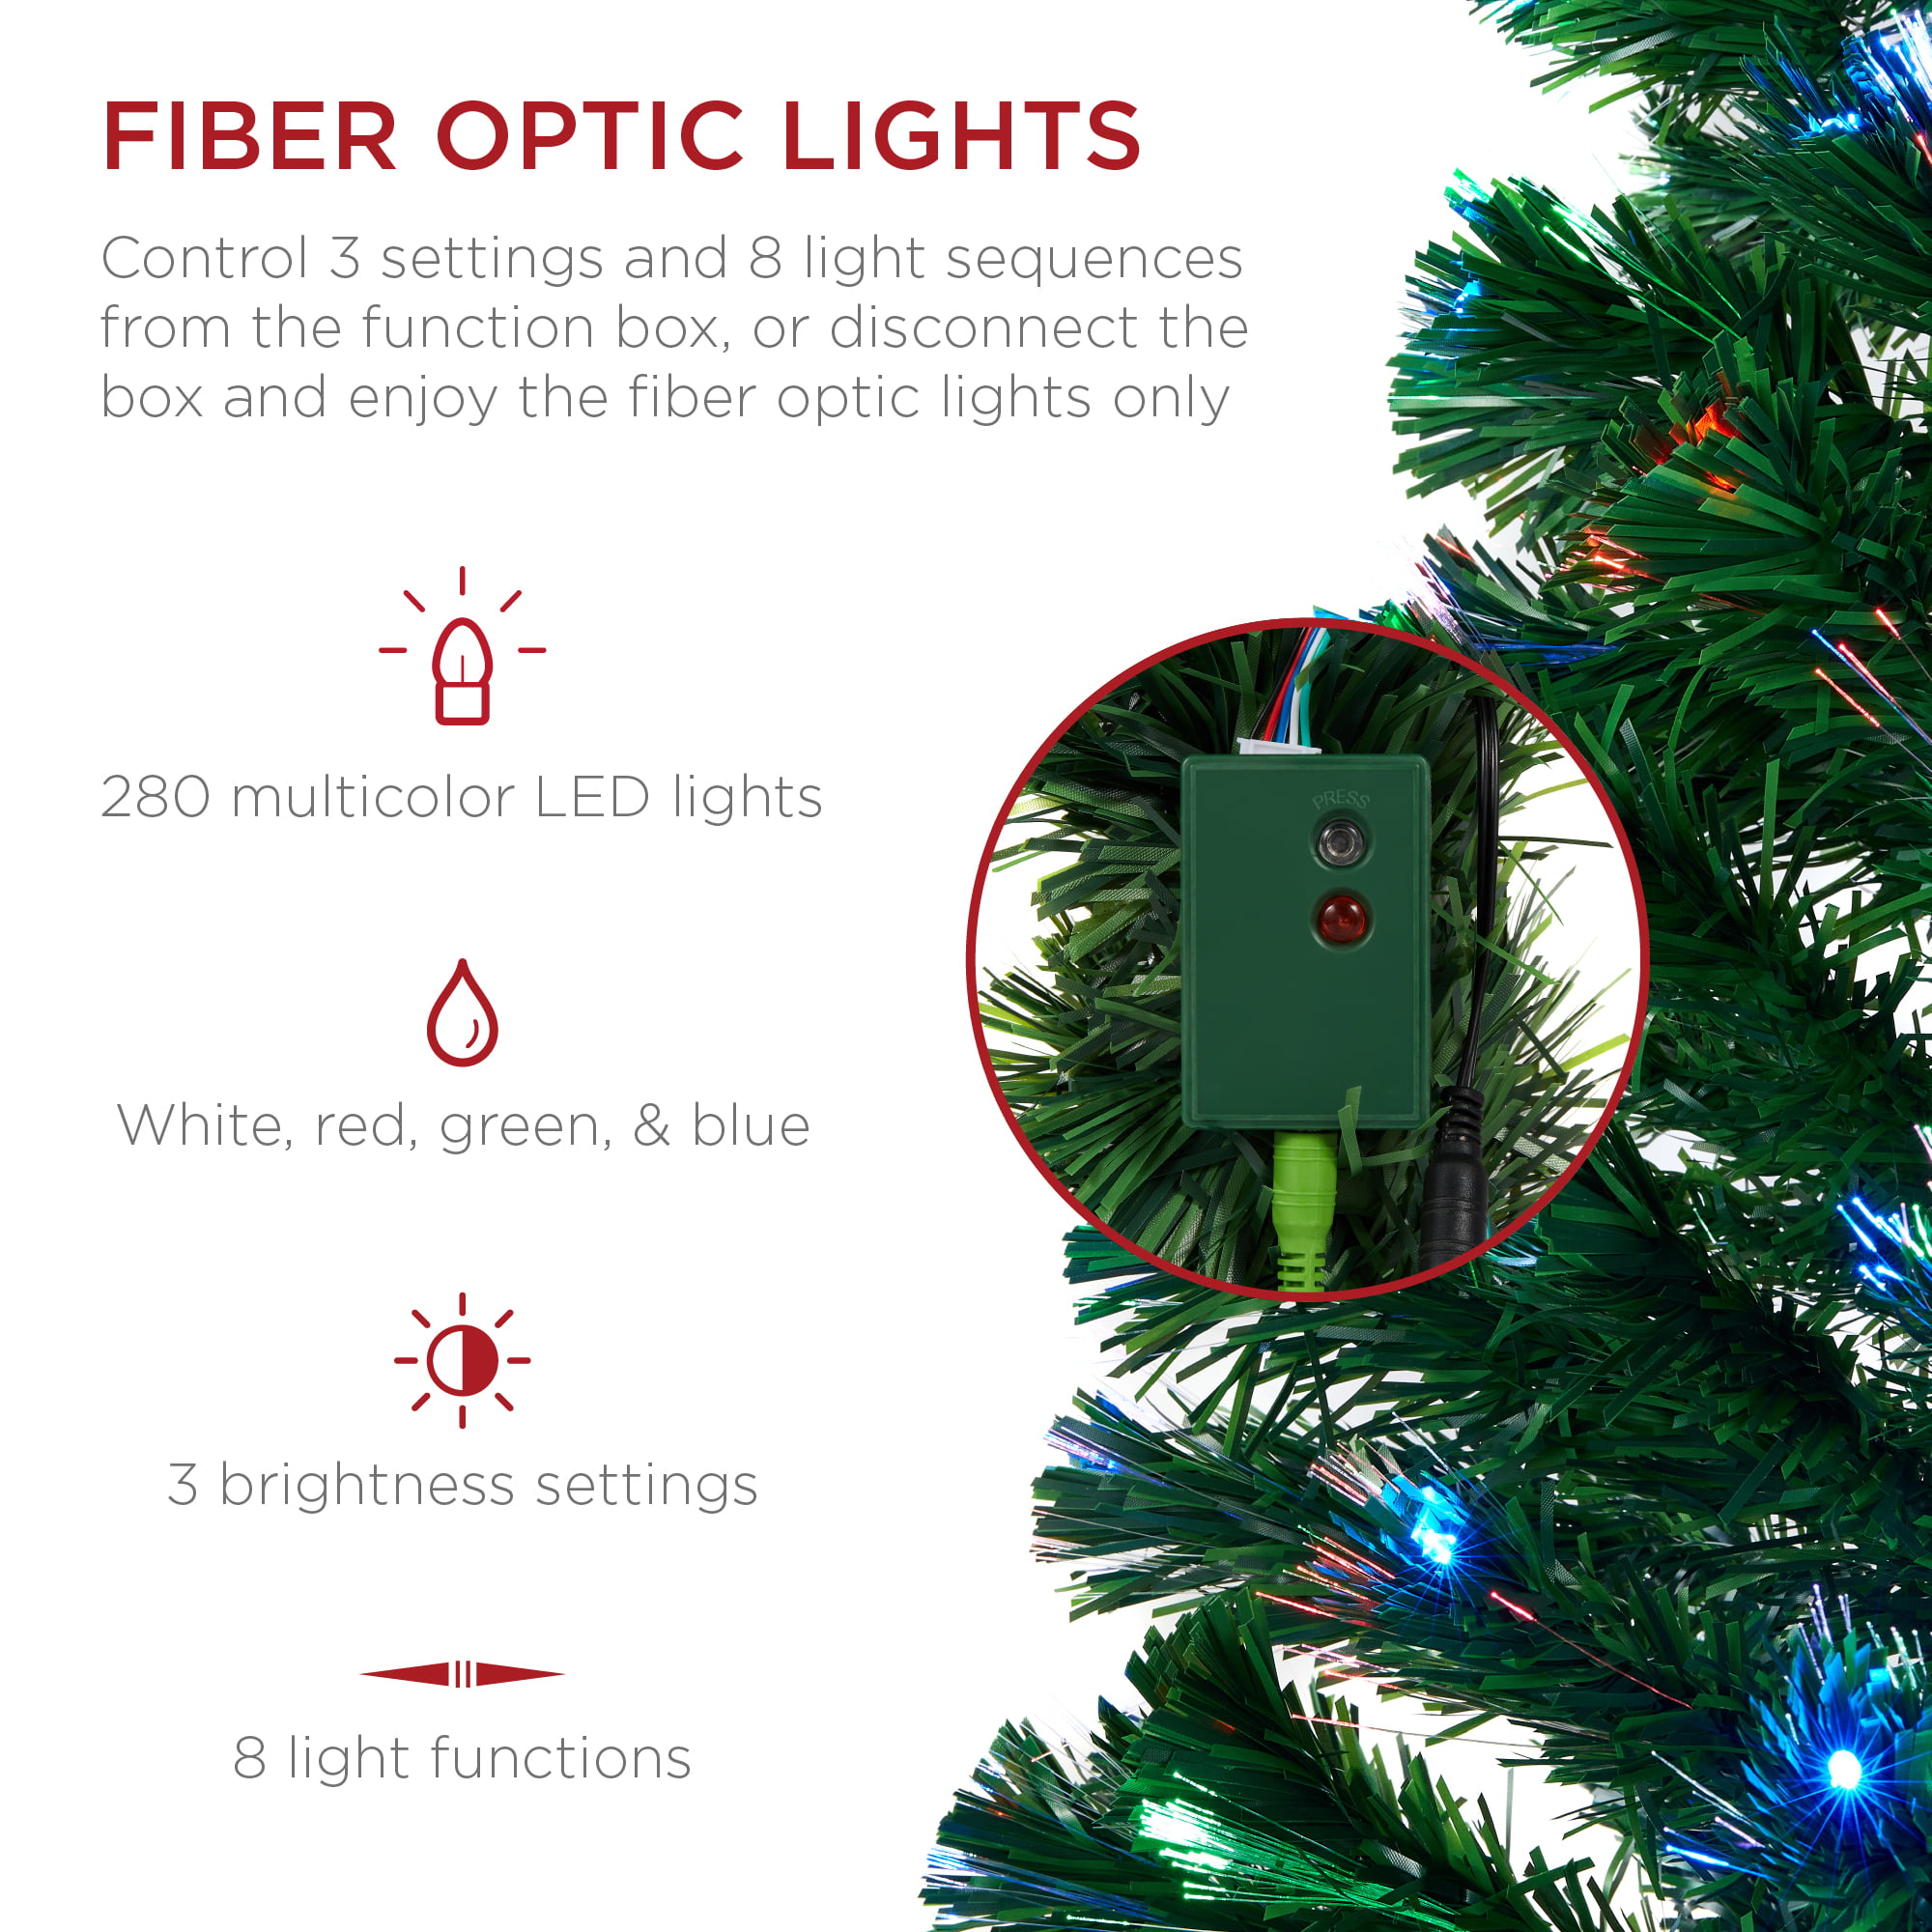 7' Pre-Lit Fiber Optic Artificial Christmas Tree w/Snowflake LED Lights&Top Star 